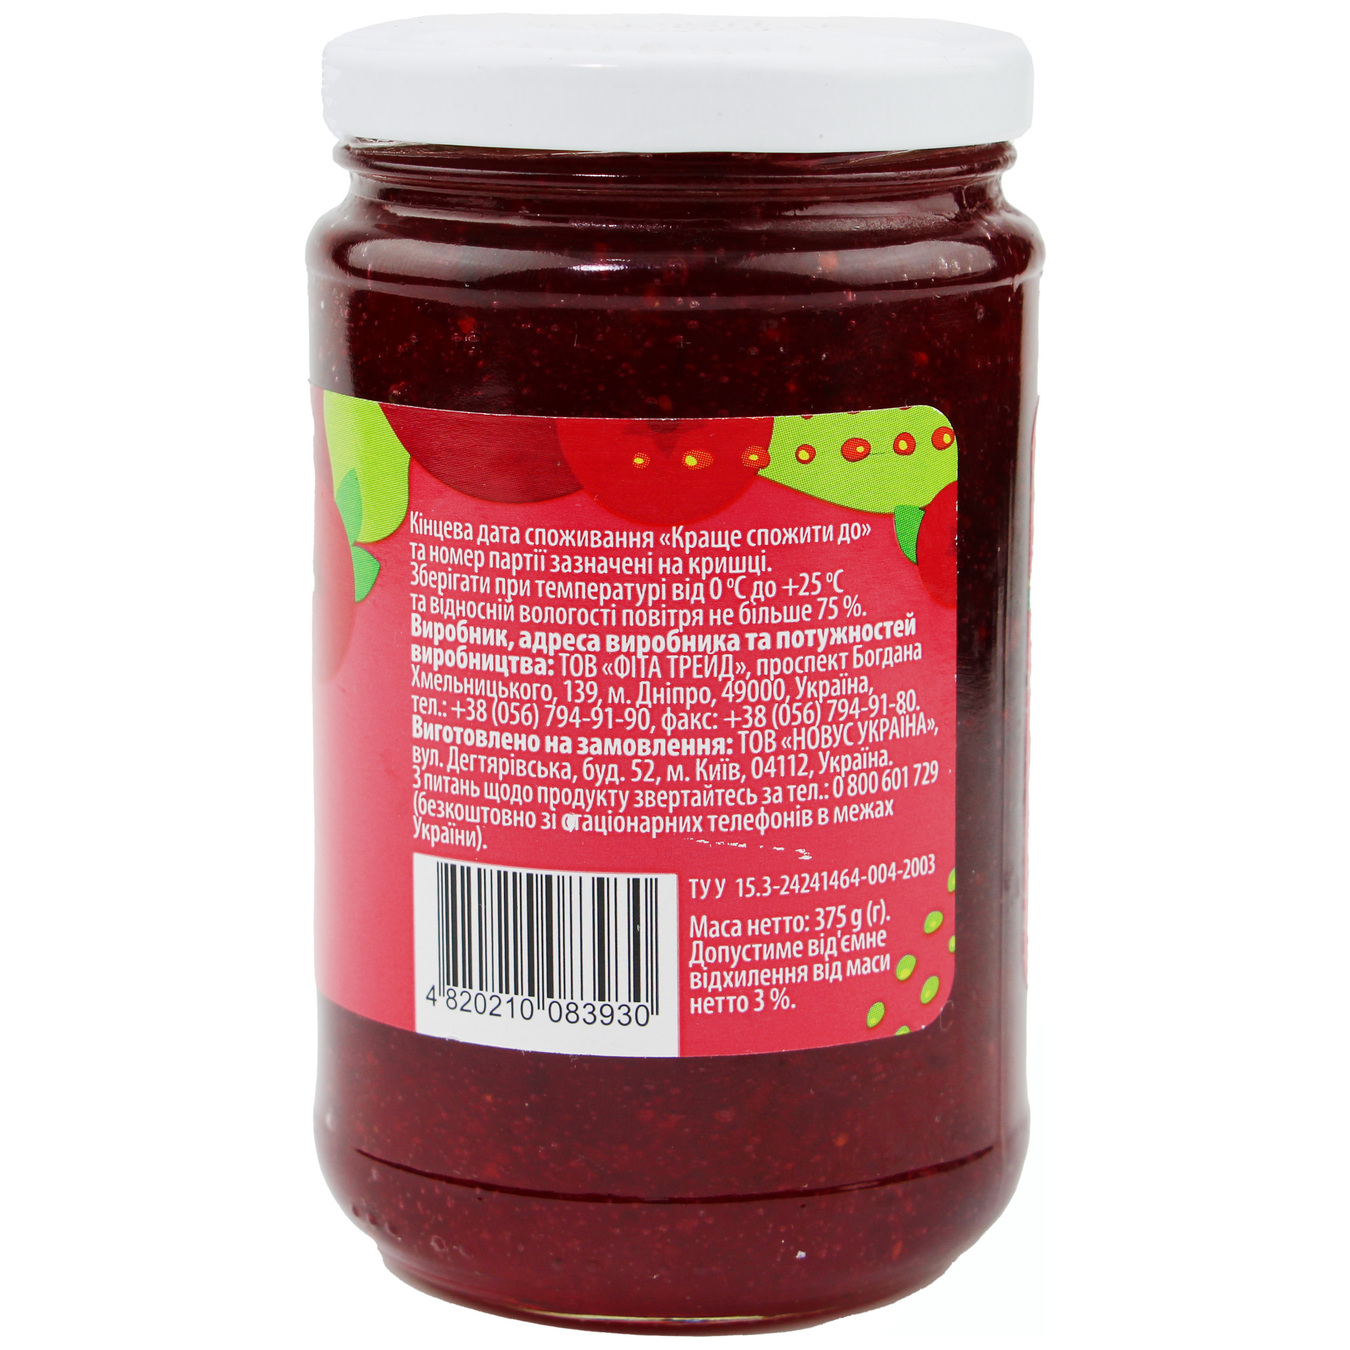 NOVUS Cranberry Jam 375g 2